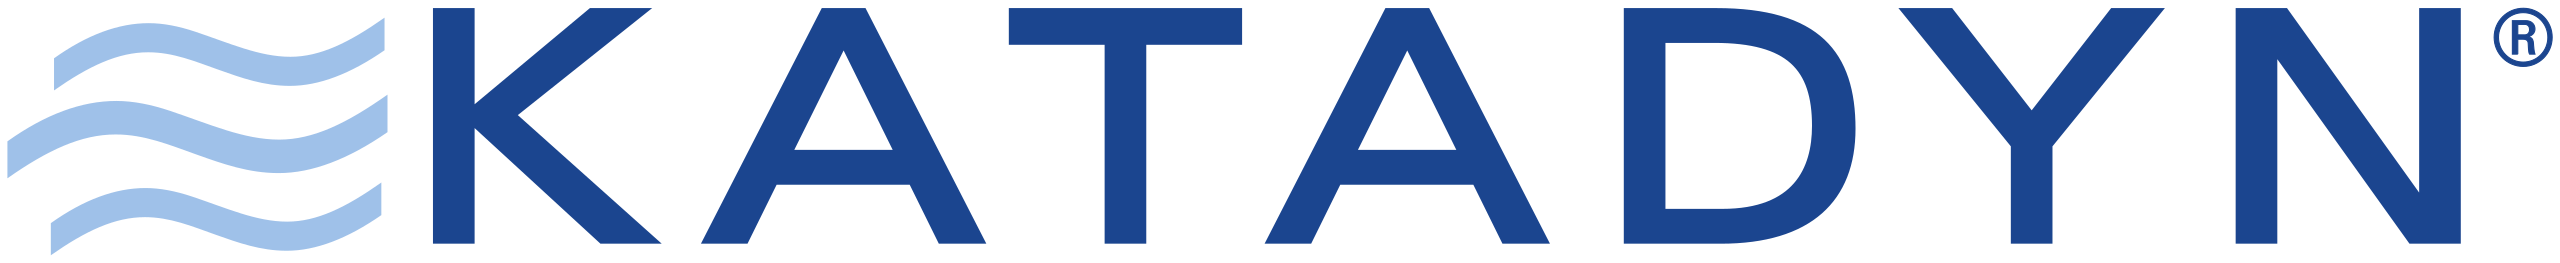 Katadyn-logo.svg